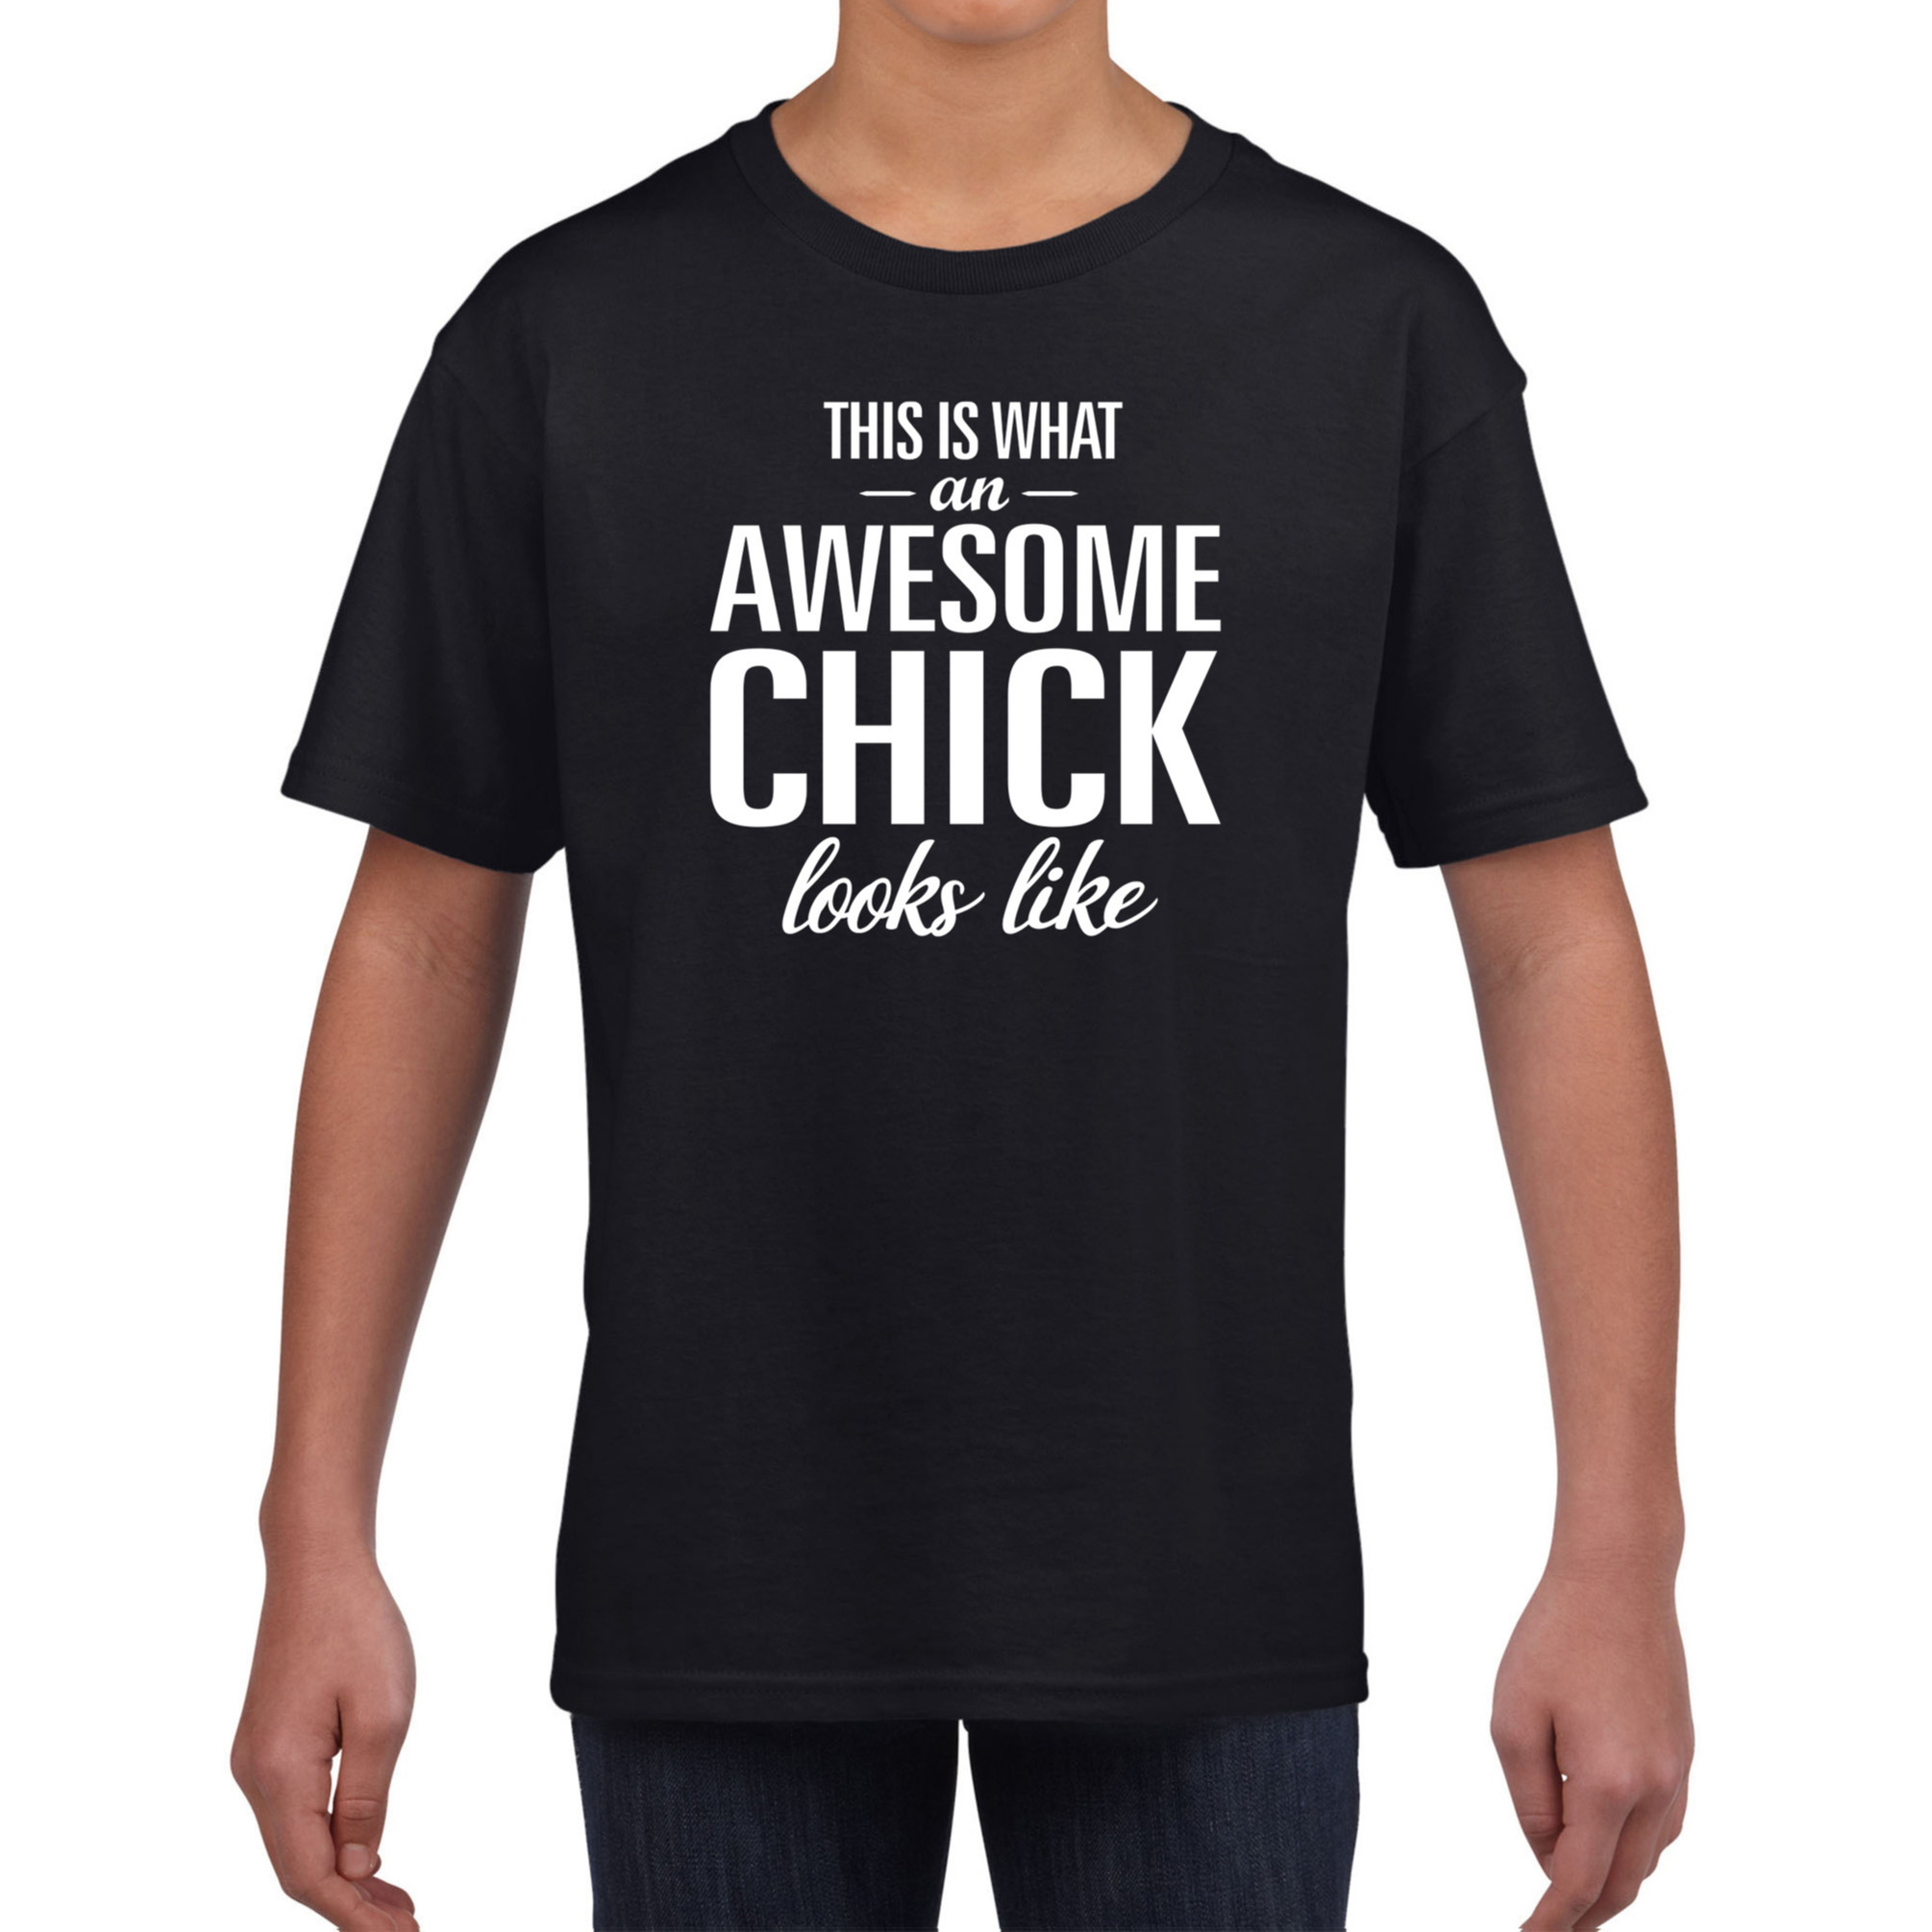 Awesome chick tekst t-shirt zwart voor meisjes